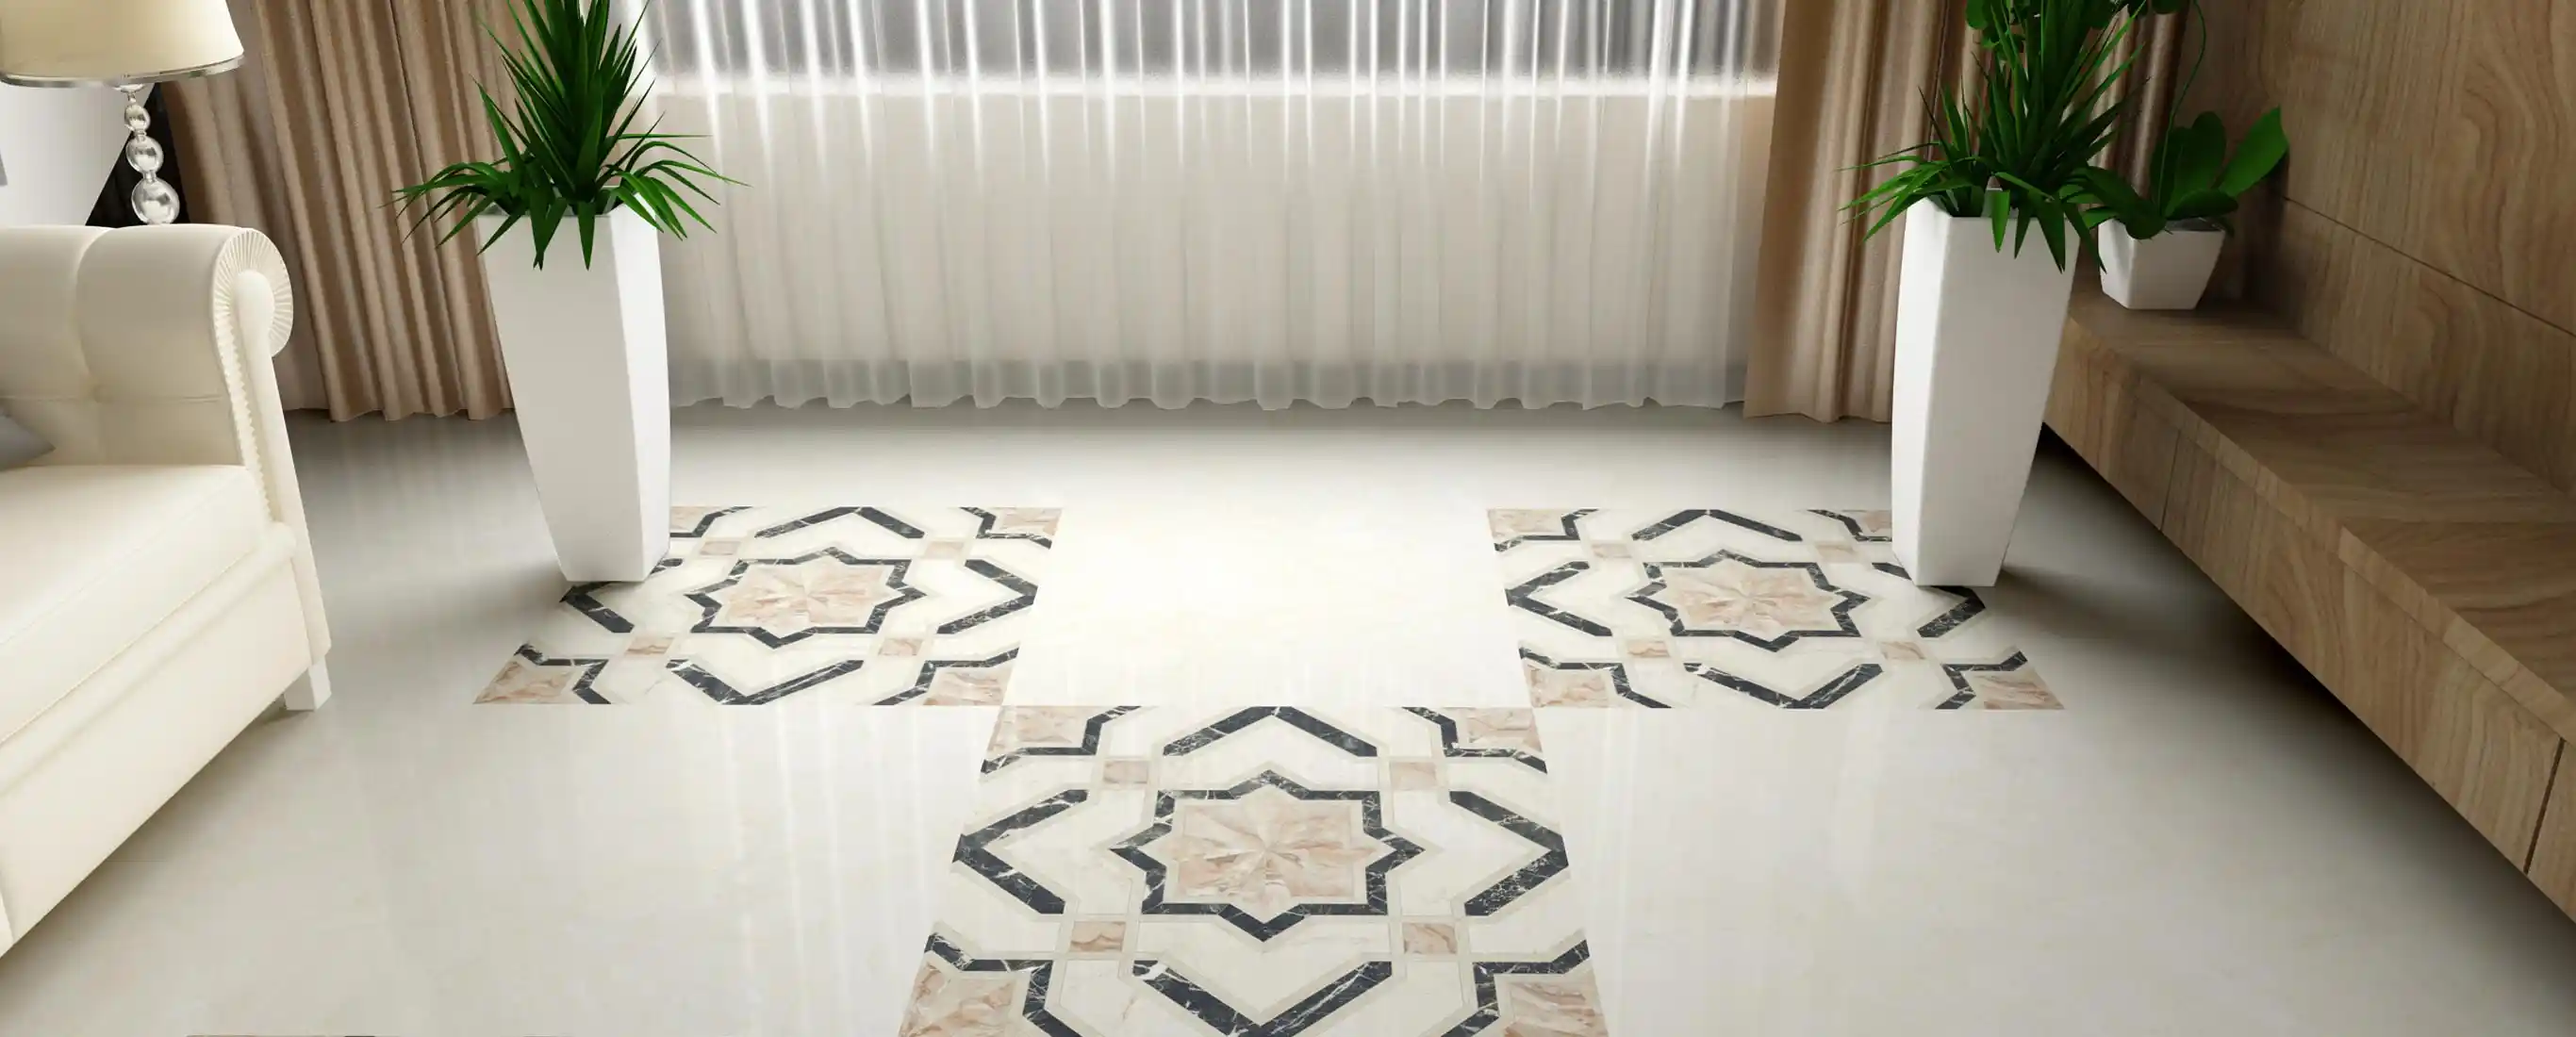 Best Floor Tiles Design in Bangladesh at Reasonable Price